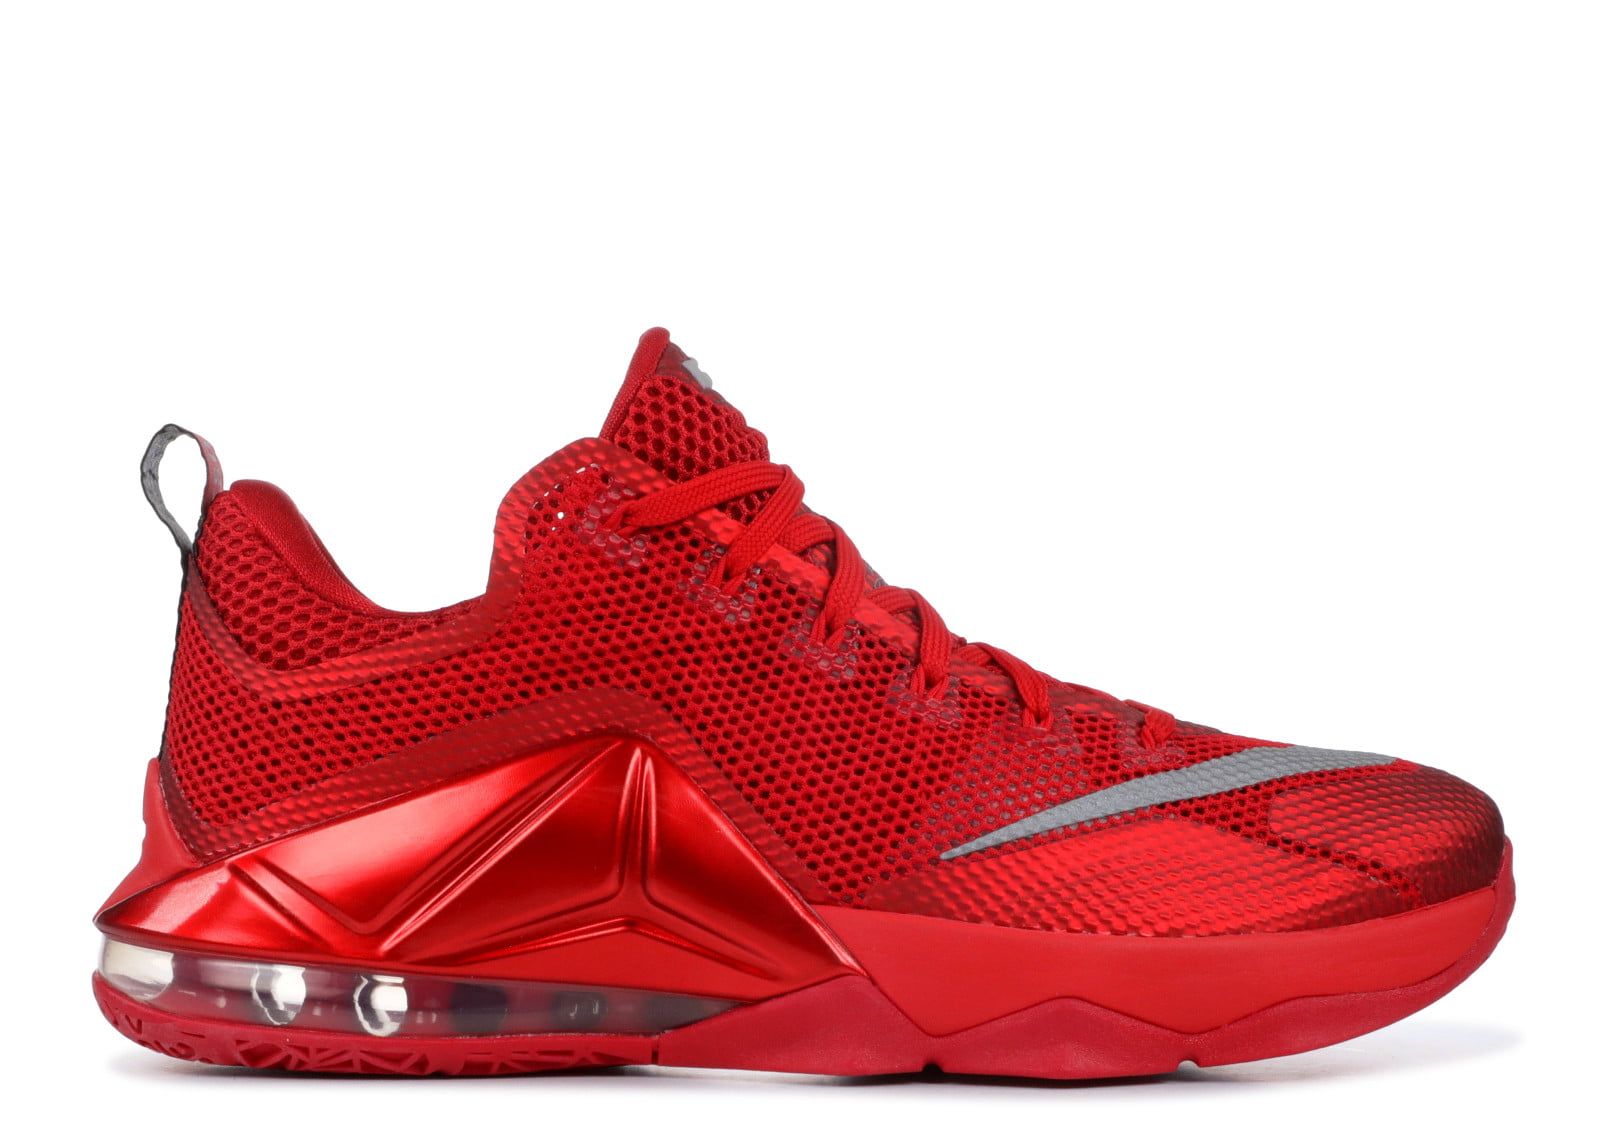 Nido Aprendizaje Lograr Nike Lebron 12 Low 'All Over Red' - 724557-616 - Size 12 - Mens -  Walmart.com